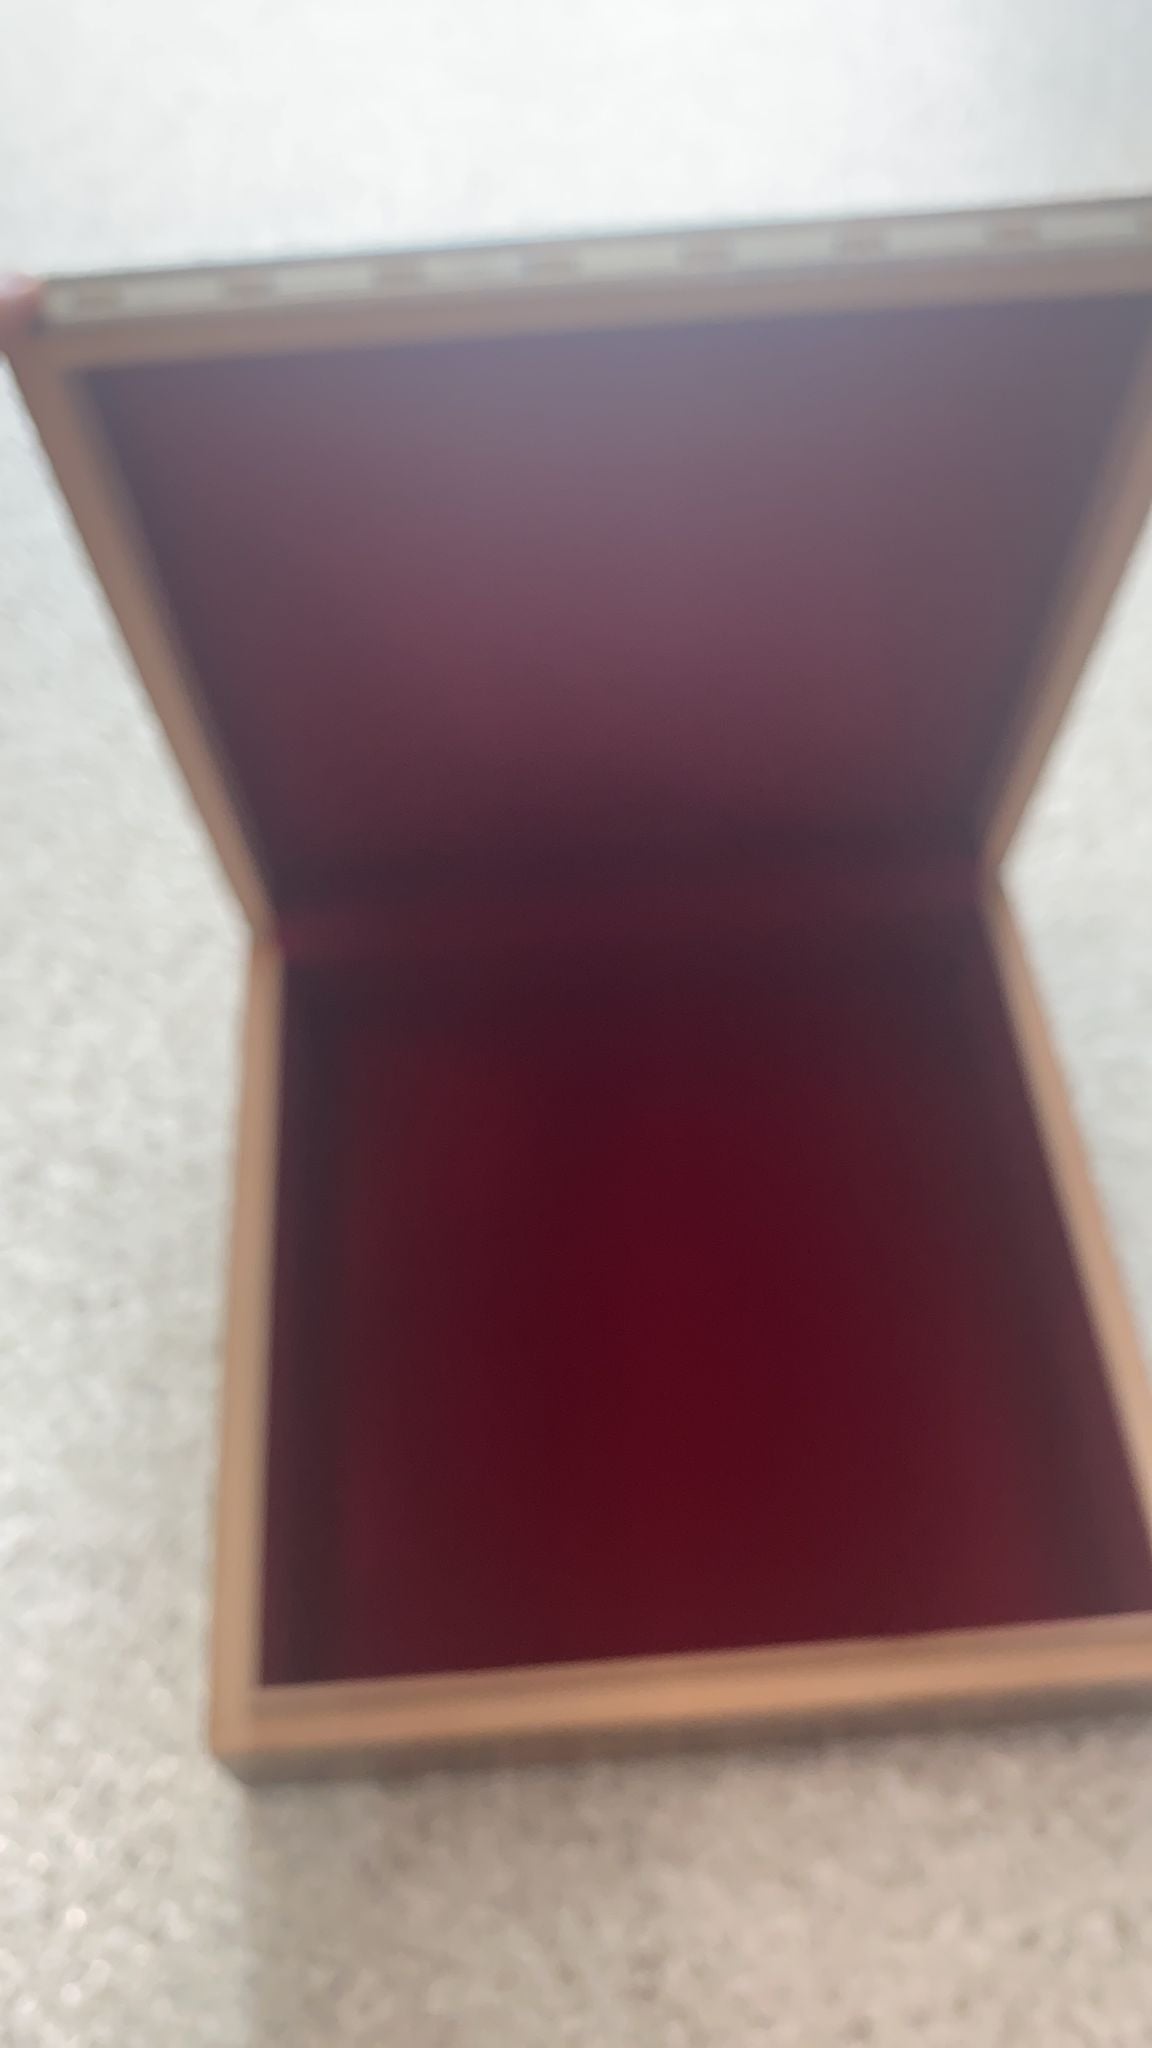 Zan Jewelry Boxes Padded with Maroon Velvet.  صناديق زان خشبيه و مبطنه للمجوهرات